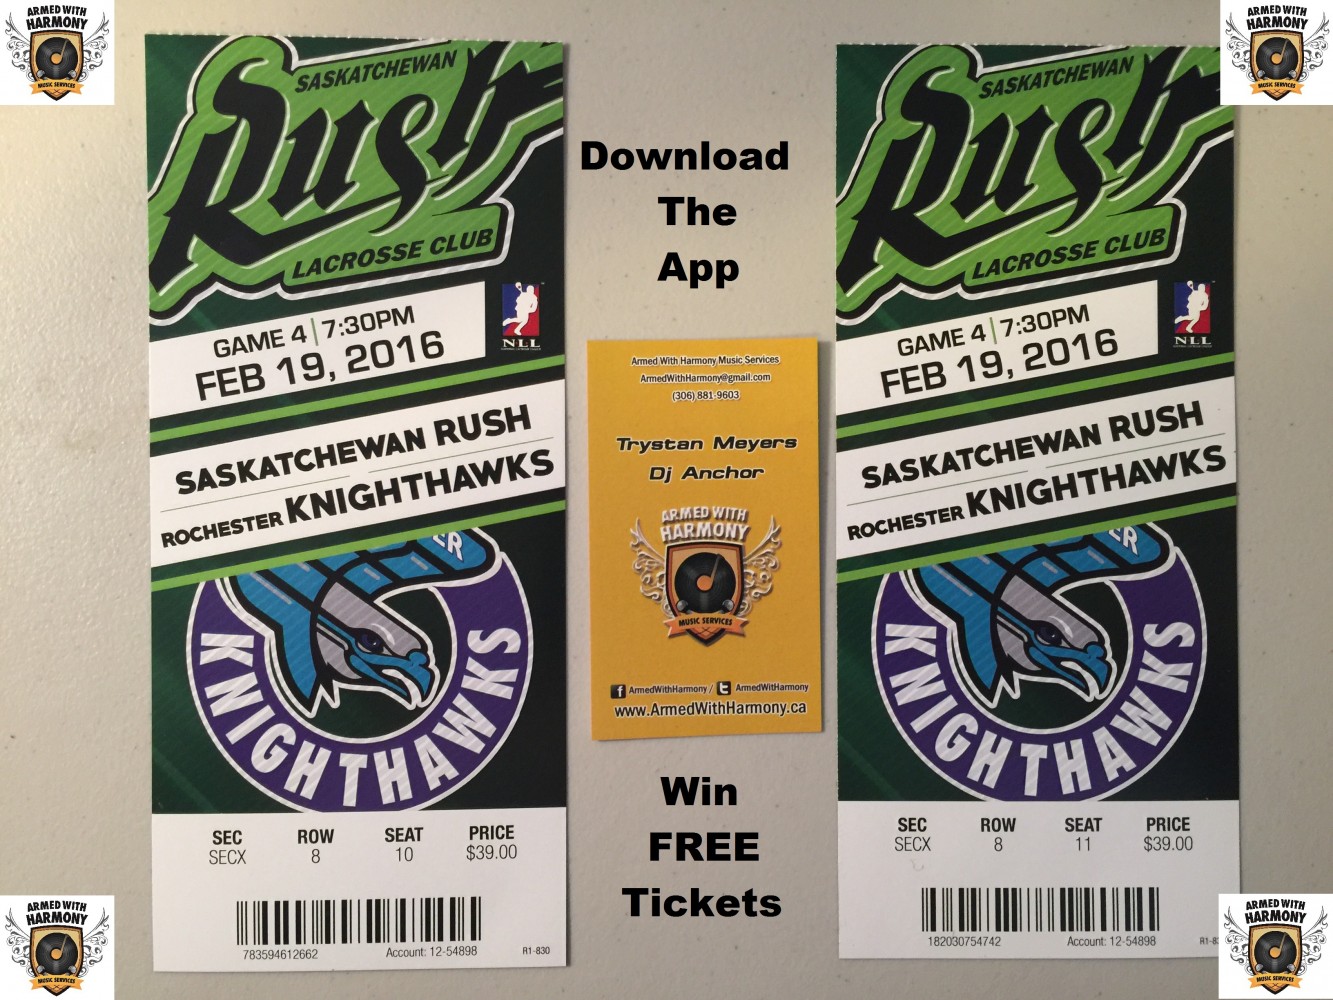 Win 2x FREE Tickets To The Next Saskatchewan Rush Home Game